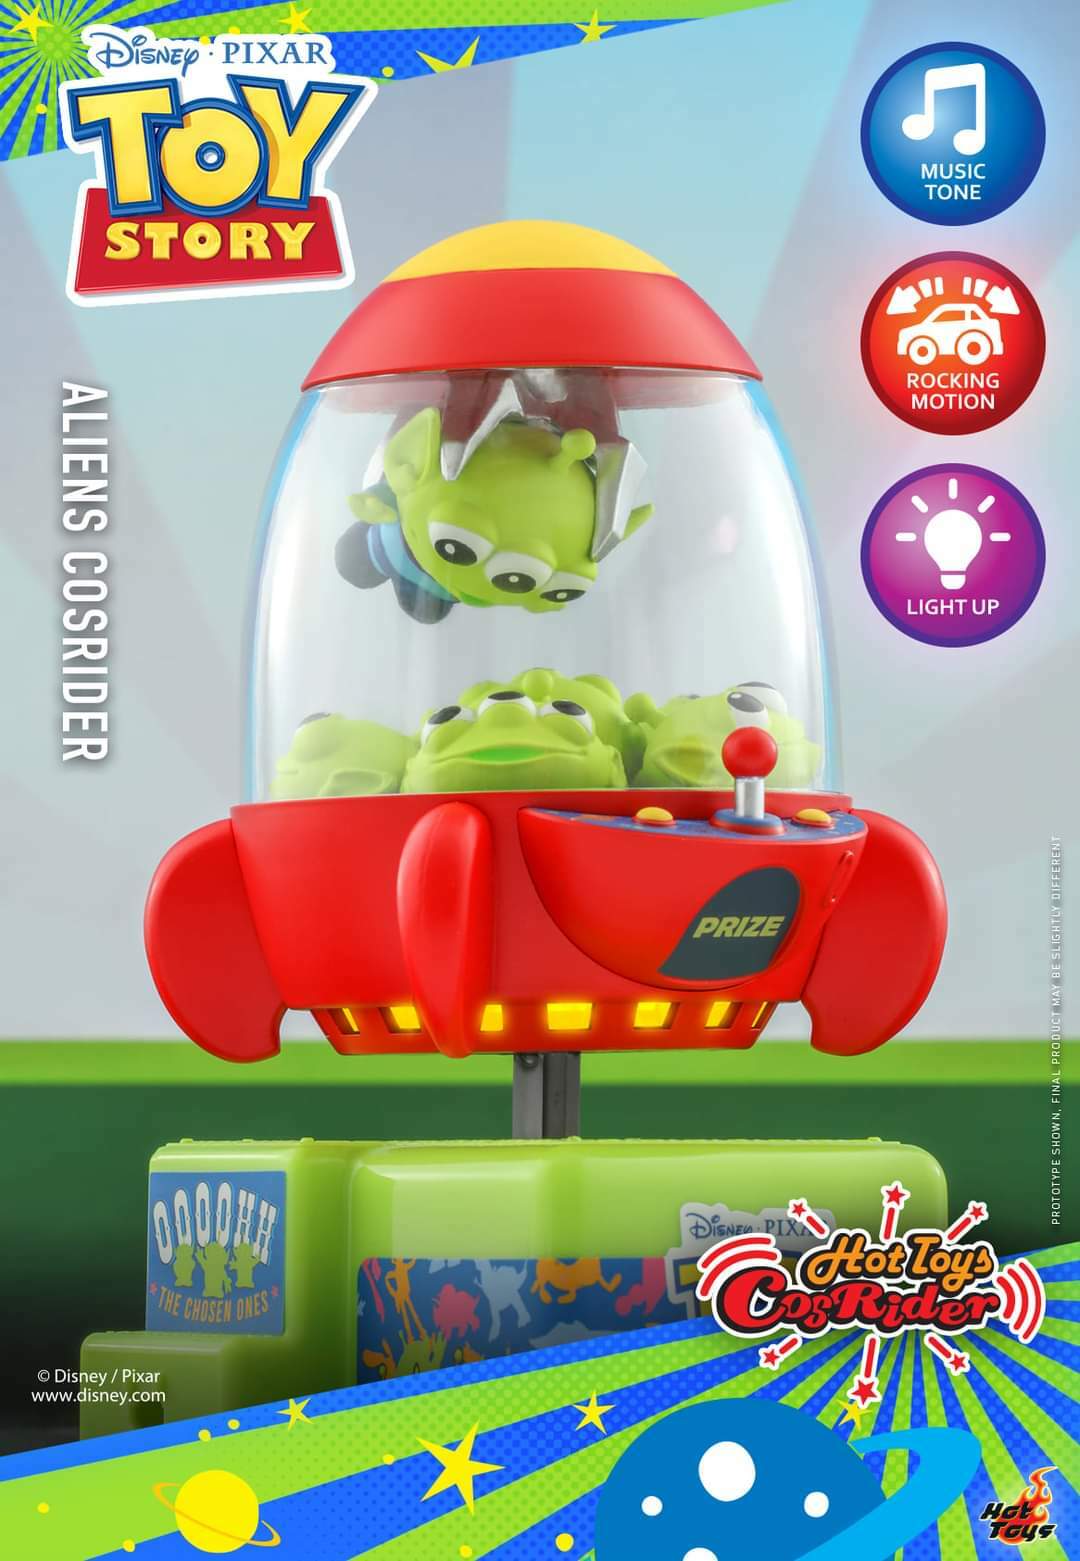 Hot Toys Toy Story Alien on spaceship CosRider CSRD017